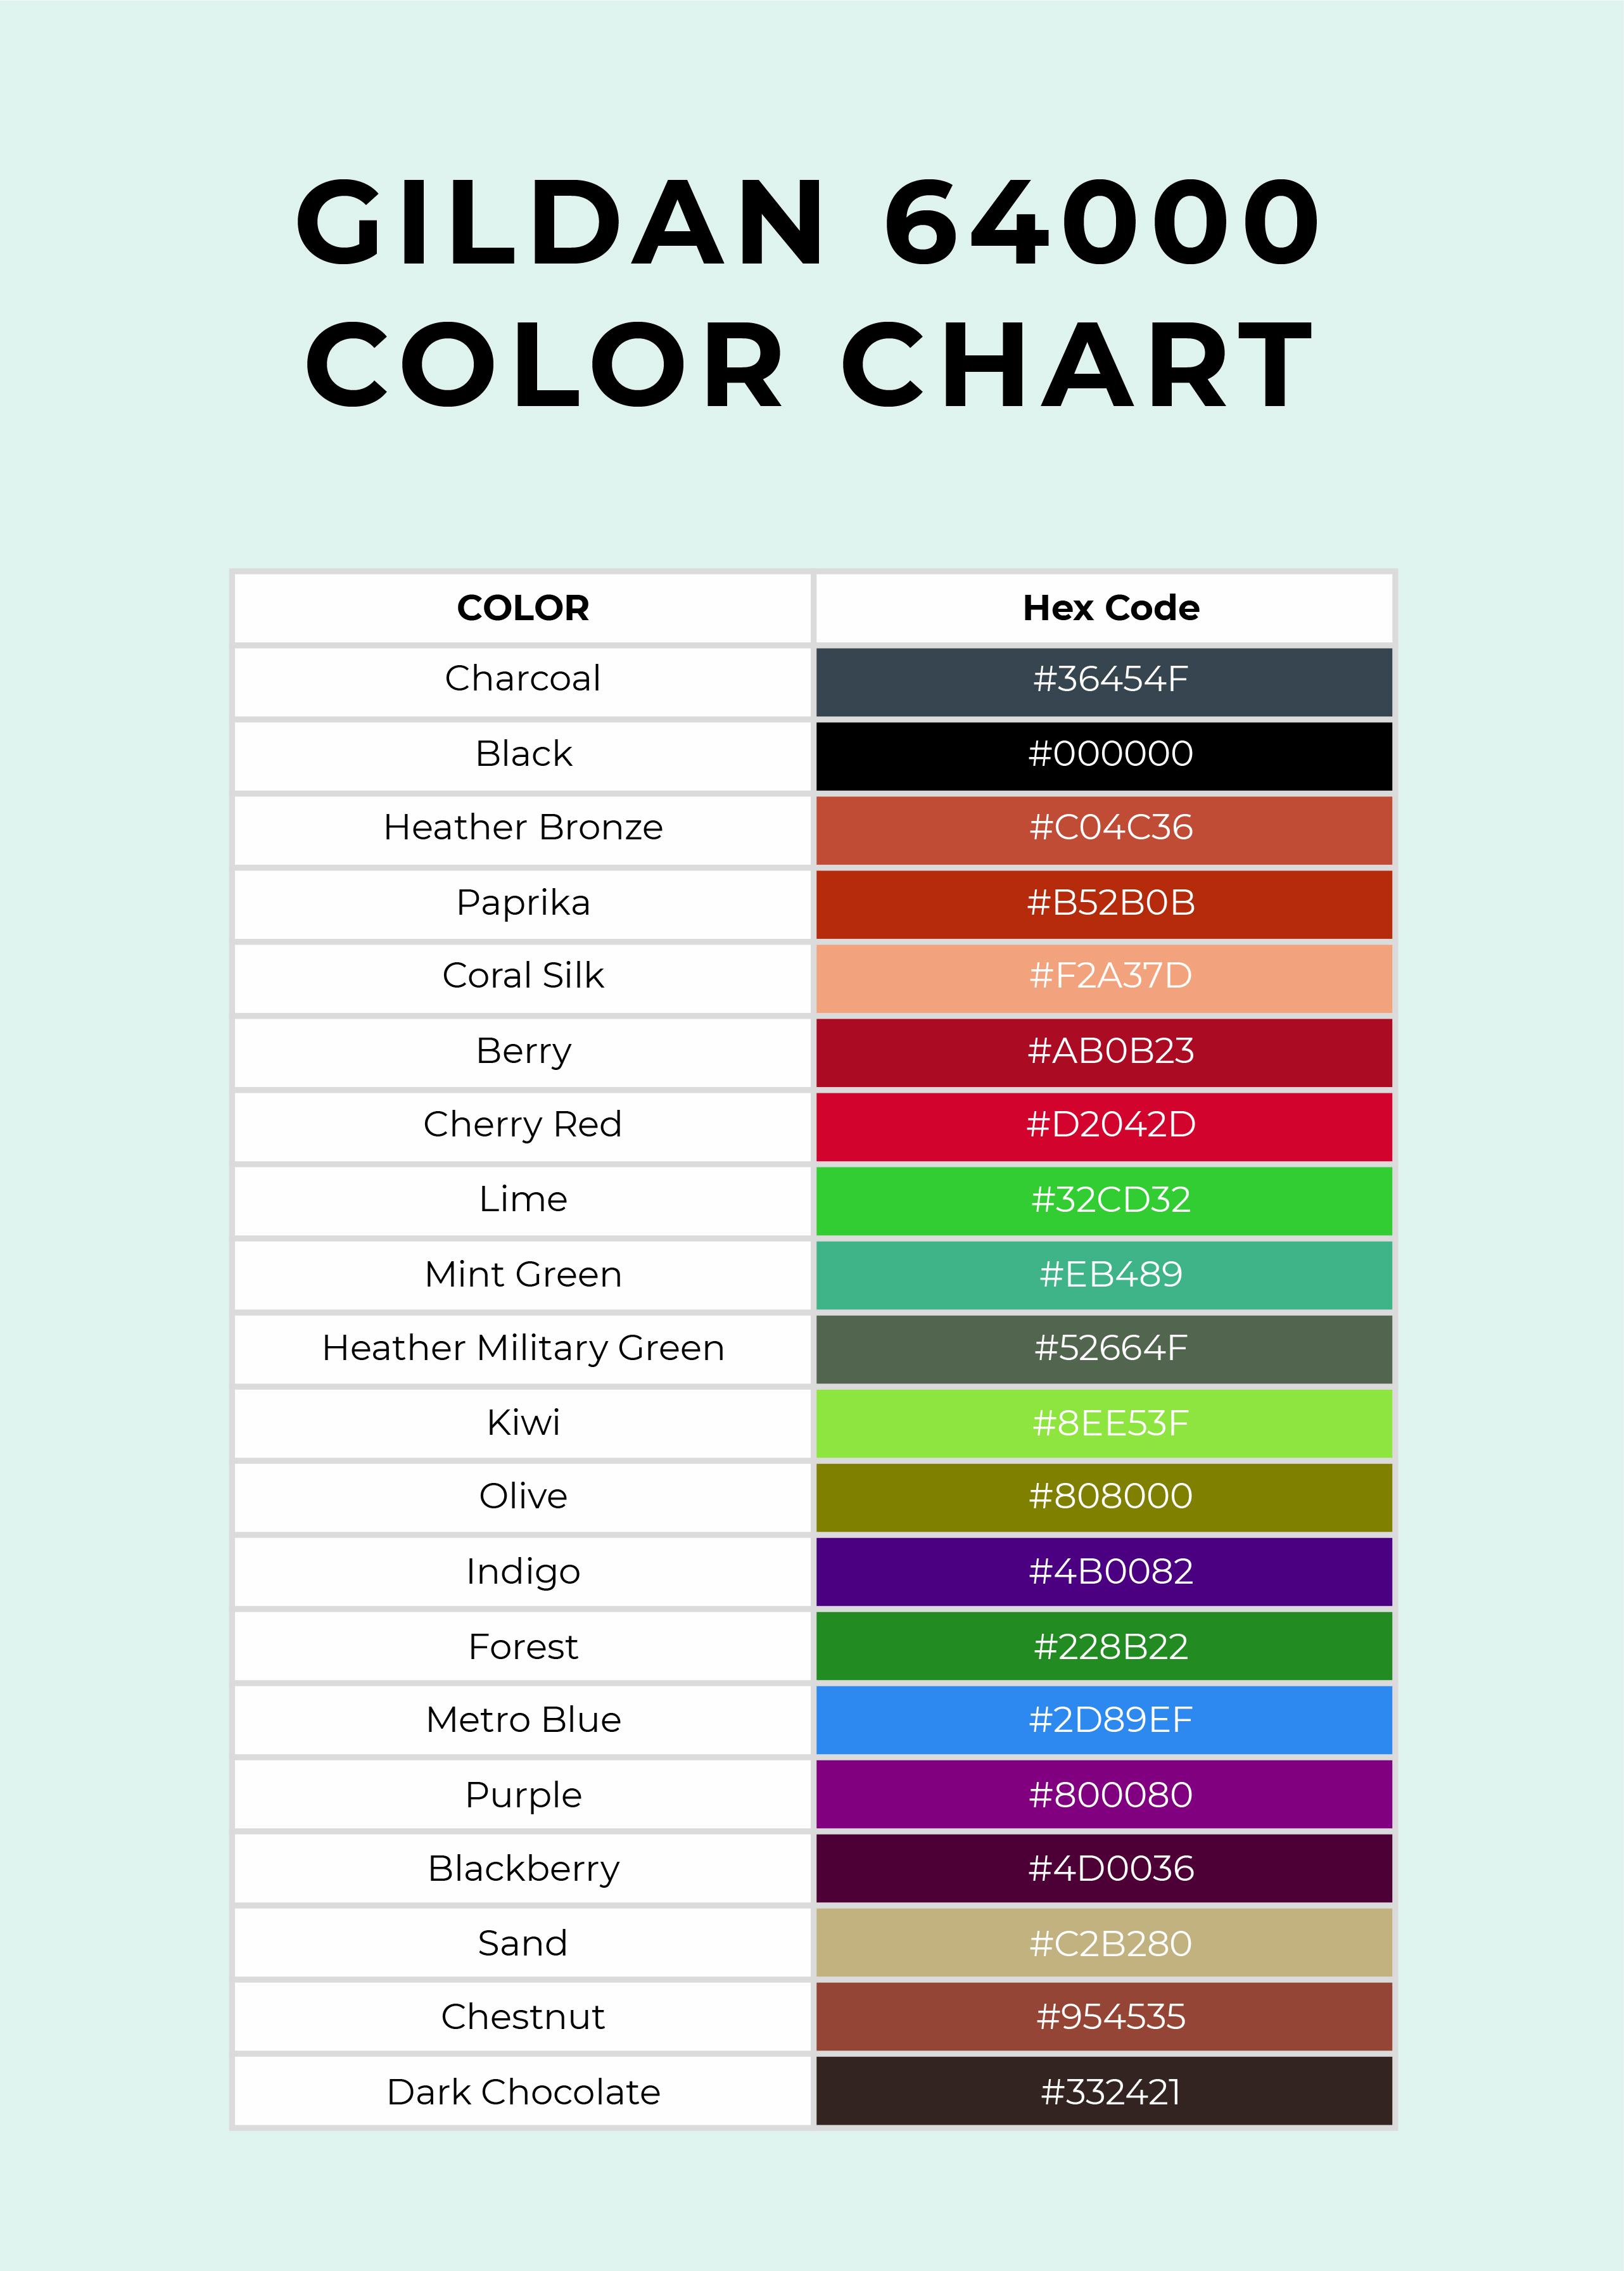 Free Gildan 64000 Color Chart - Download in Word, PDF, Illustrator, PSD